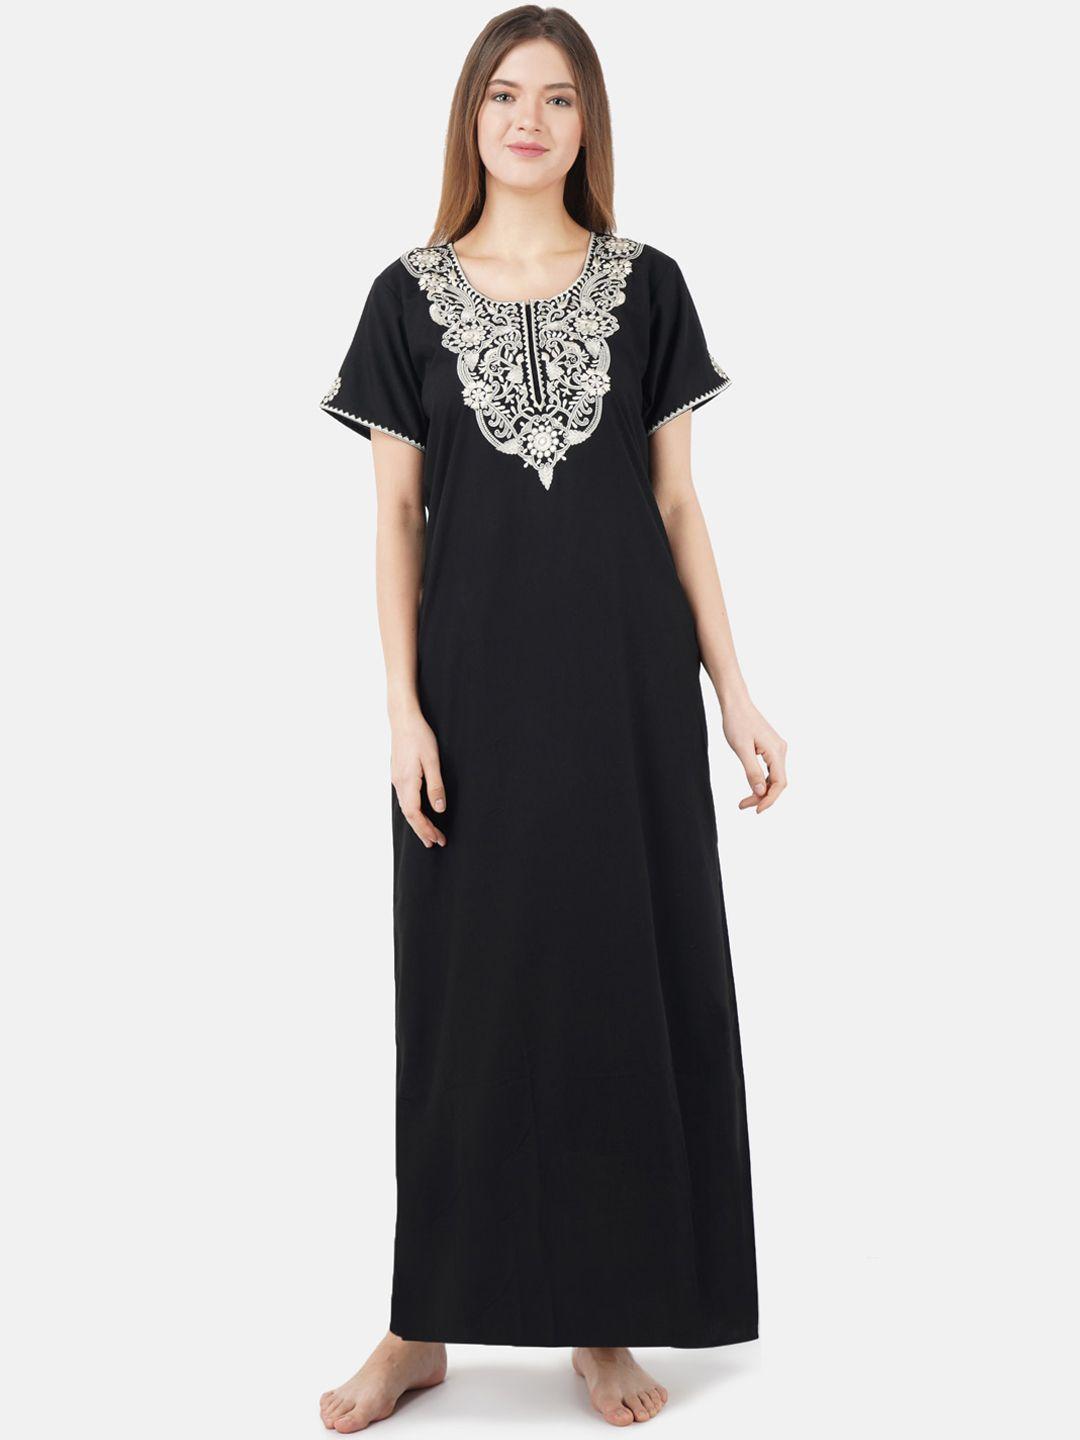 koi-sleepwear-black-embroidered-lissybissy-cotton-maxi-nightdress